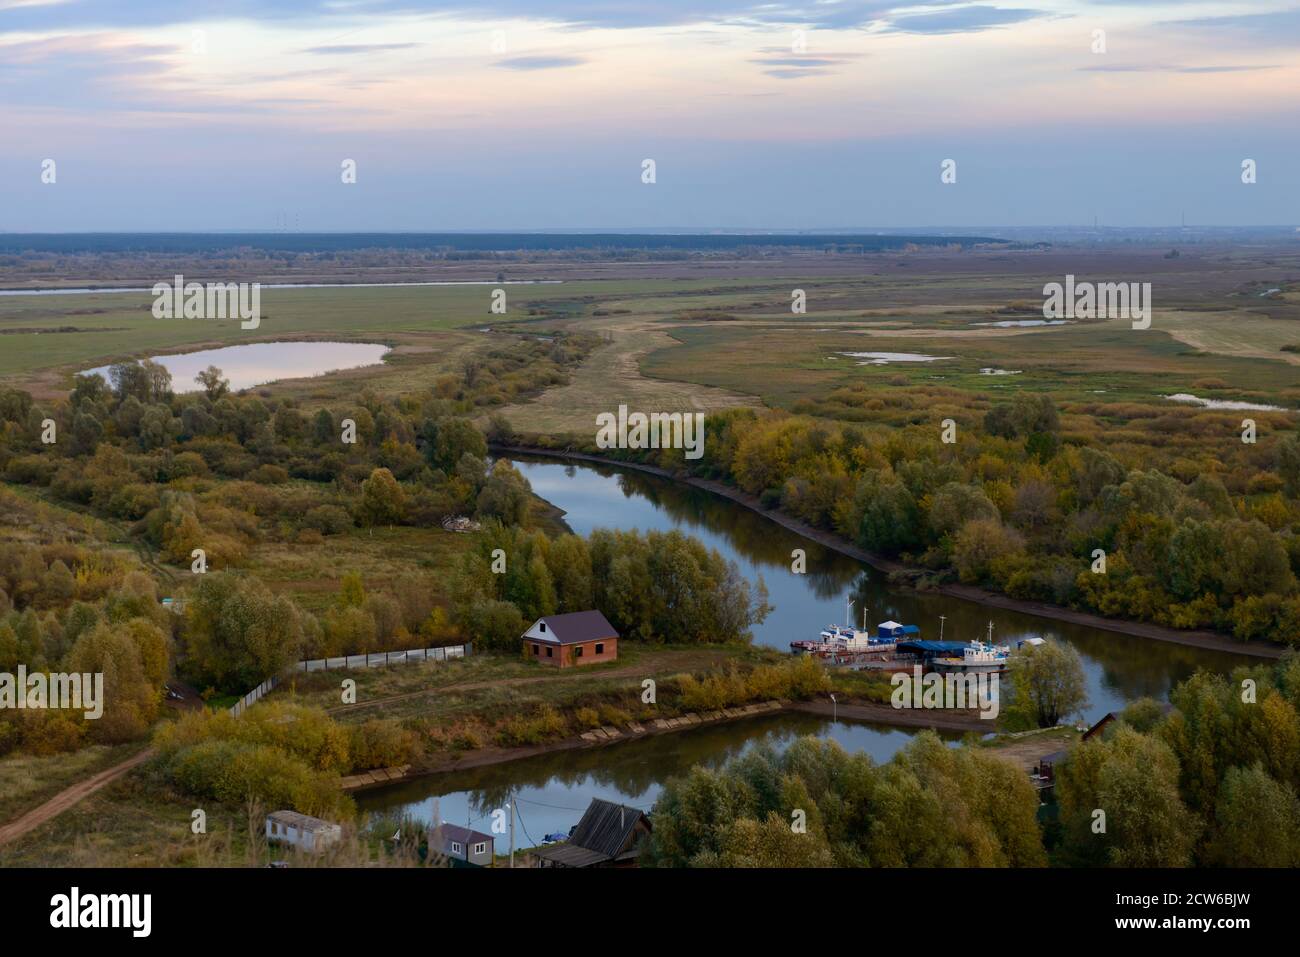 View of the confluence of the Toyma river into the Kama river, Elabuga, Tatarstan, Russian Federation. Stock Photo